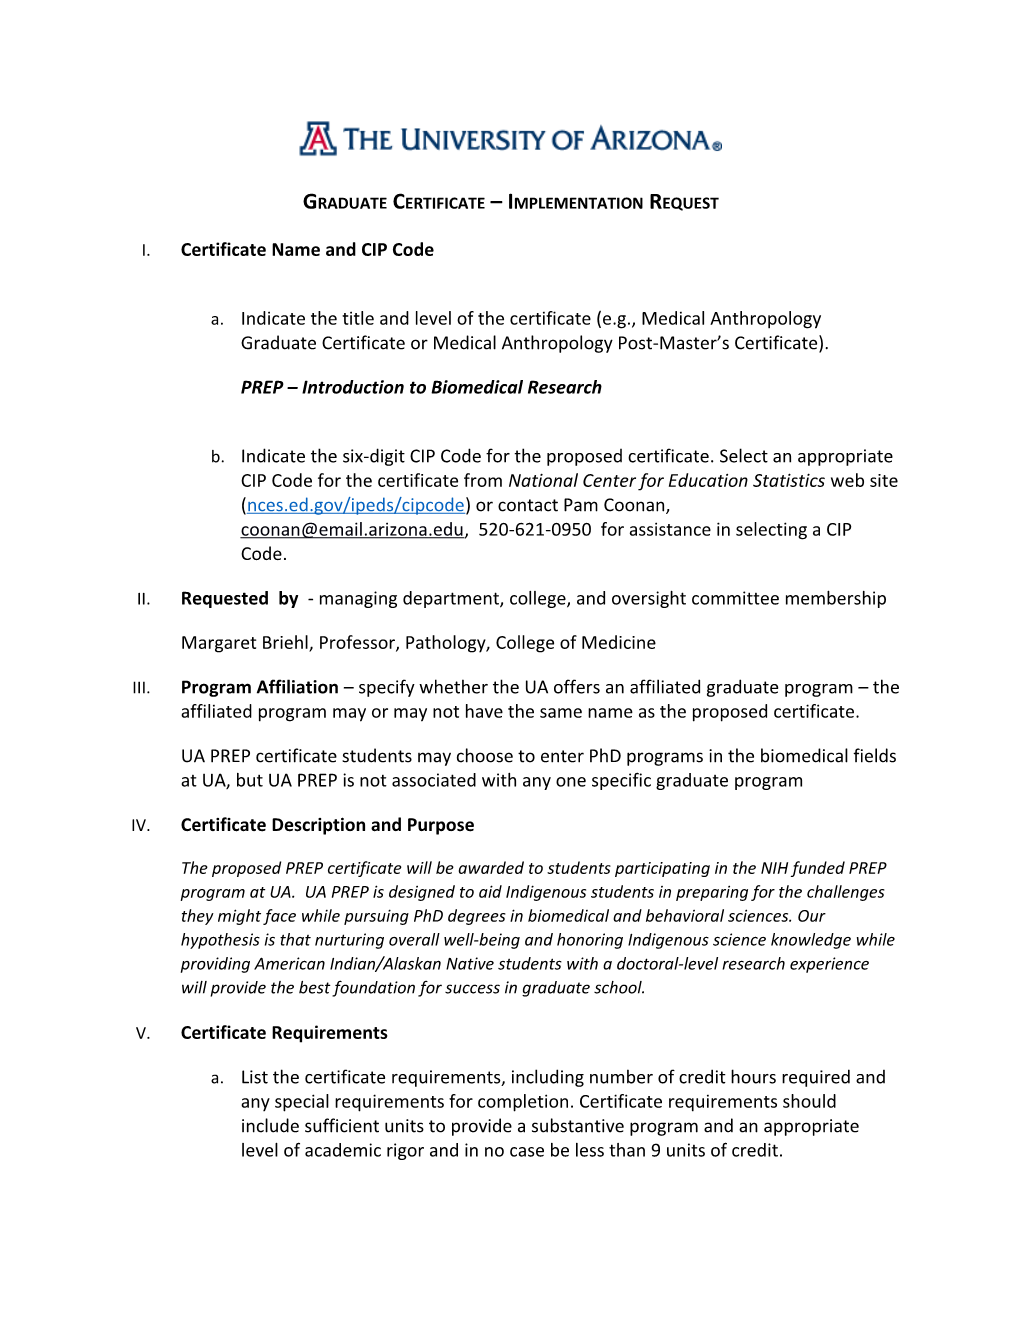 Graduate Certificate Implementation Request